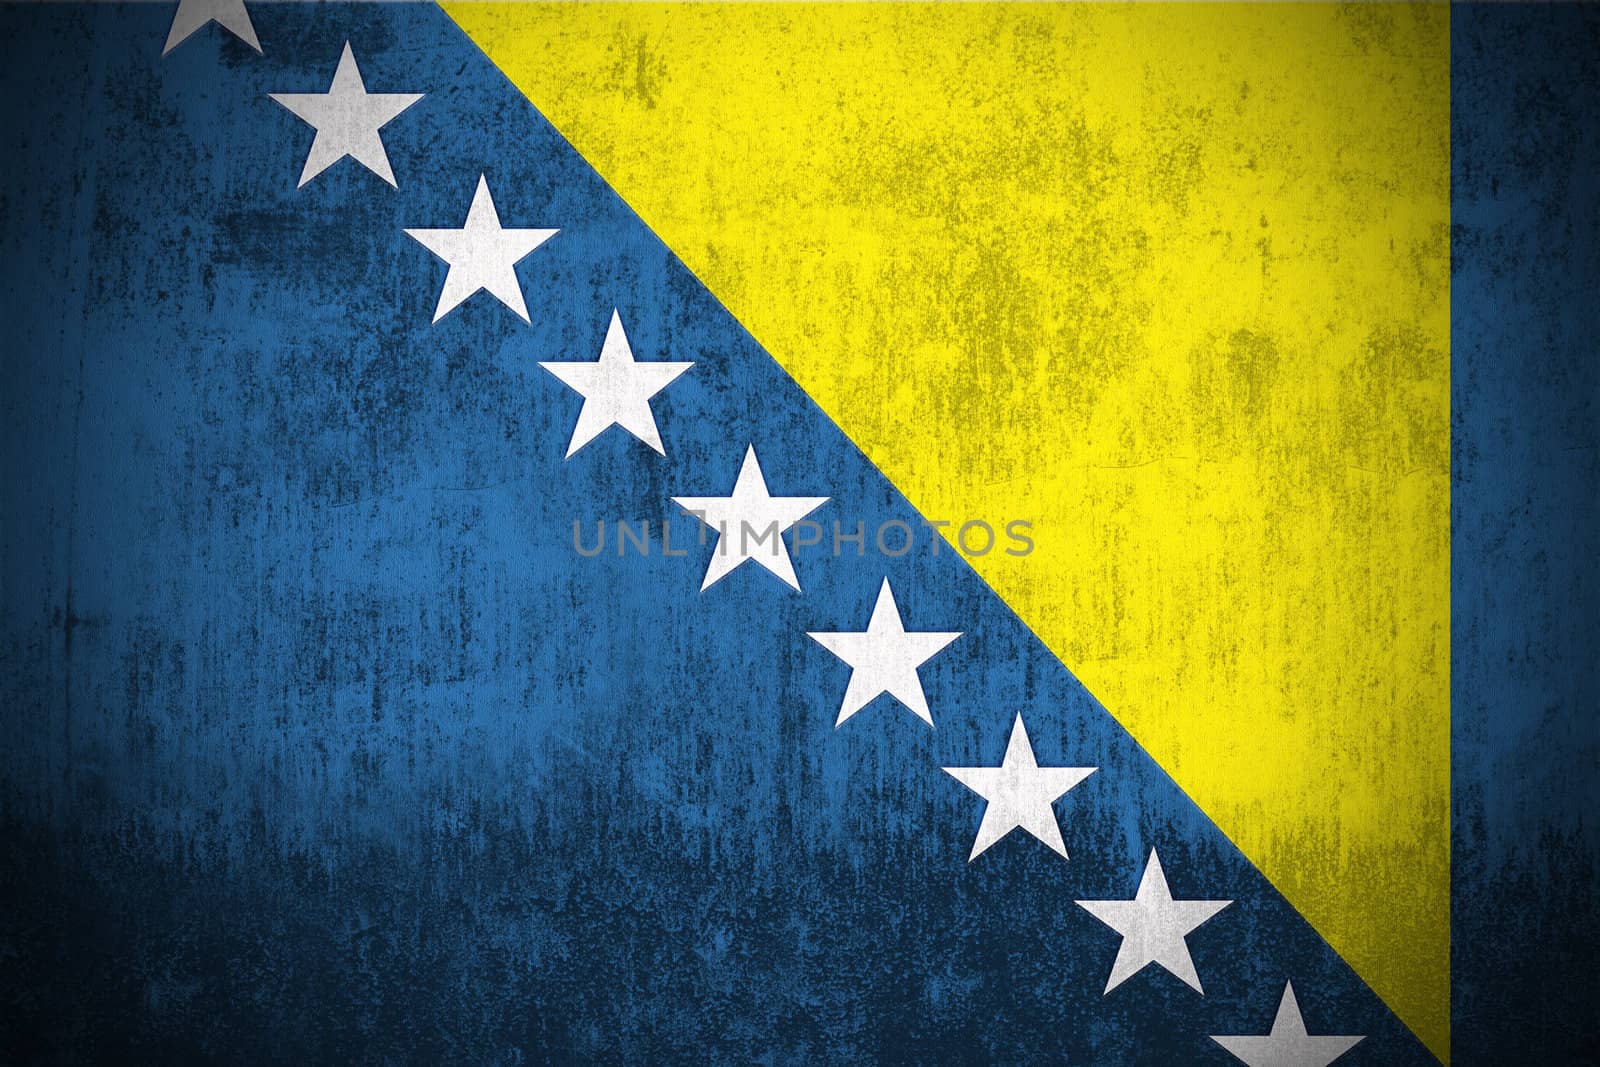 Weathered Flag Of Bosnia and Herzegovina, fabric textured
